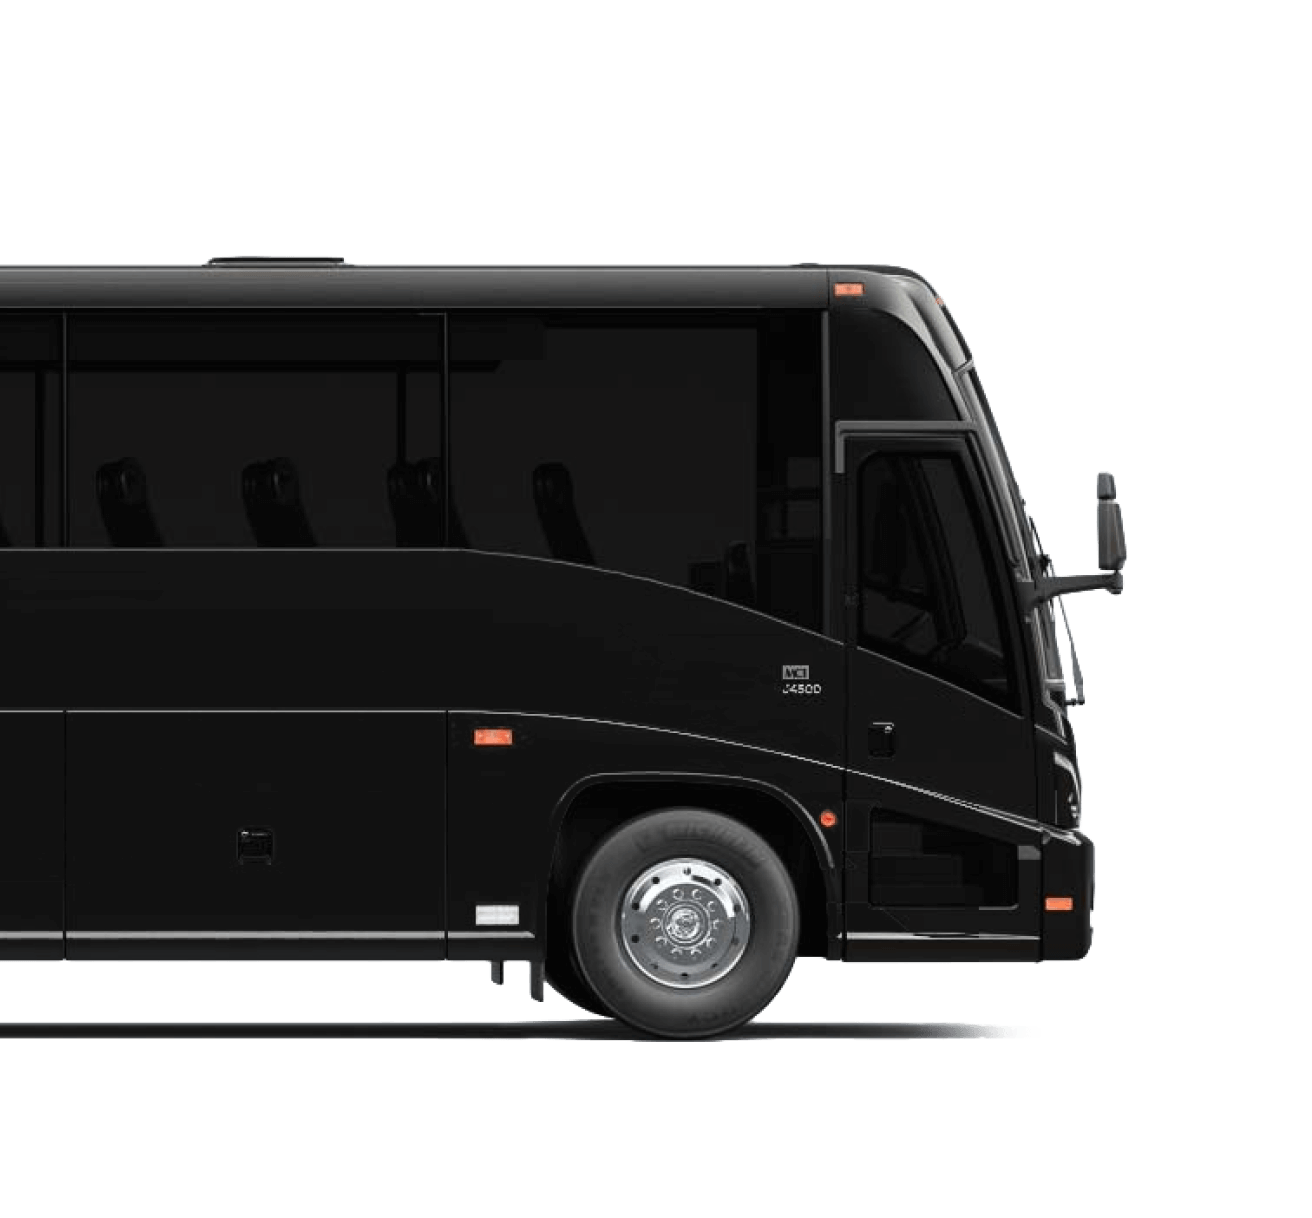 DPV Transportation - Charter Bus Rental Services